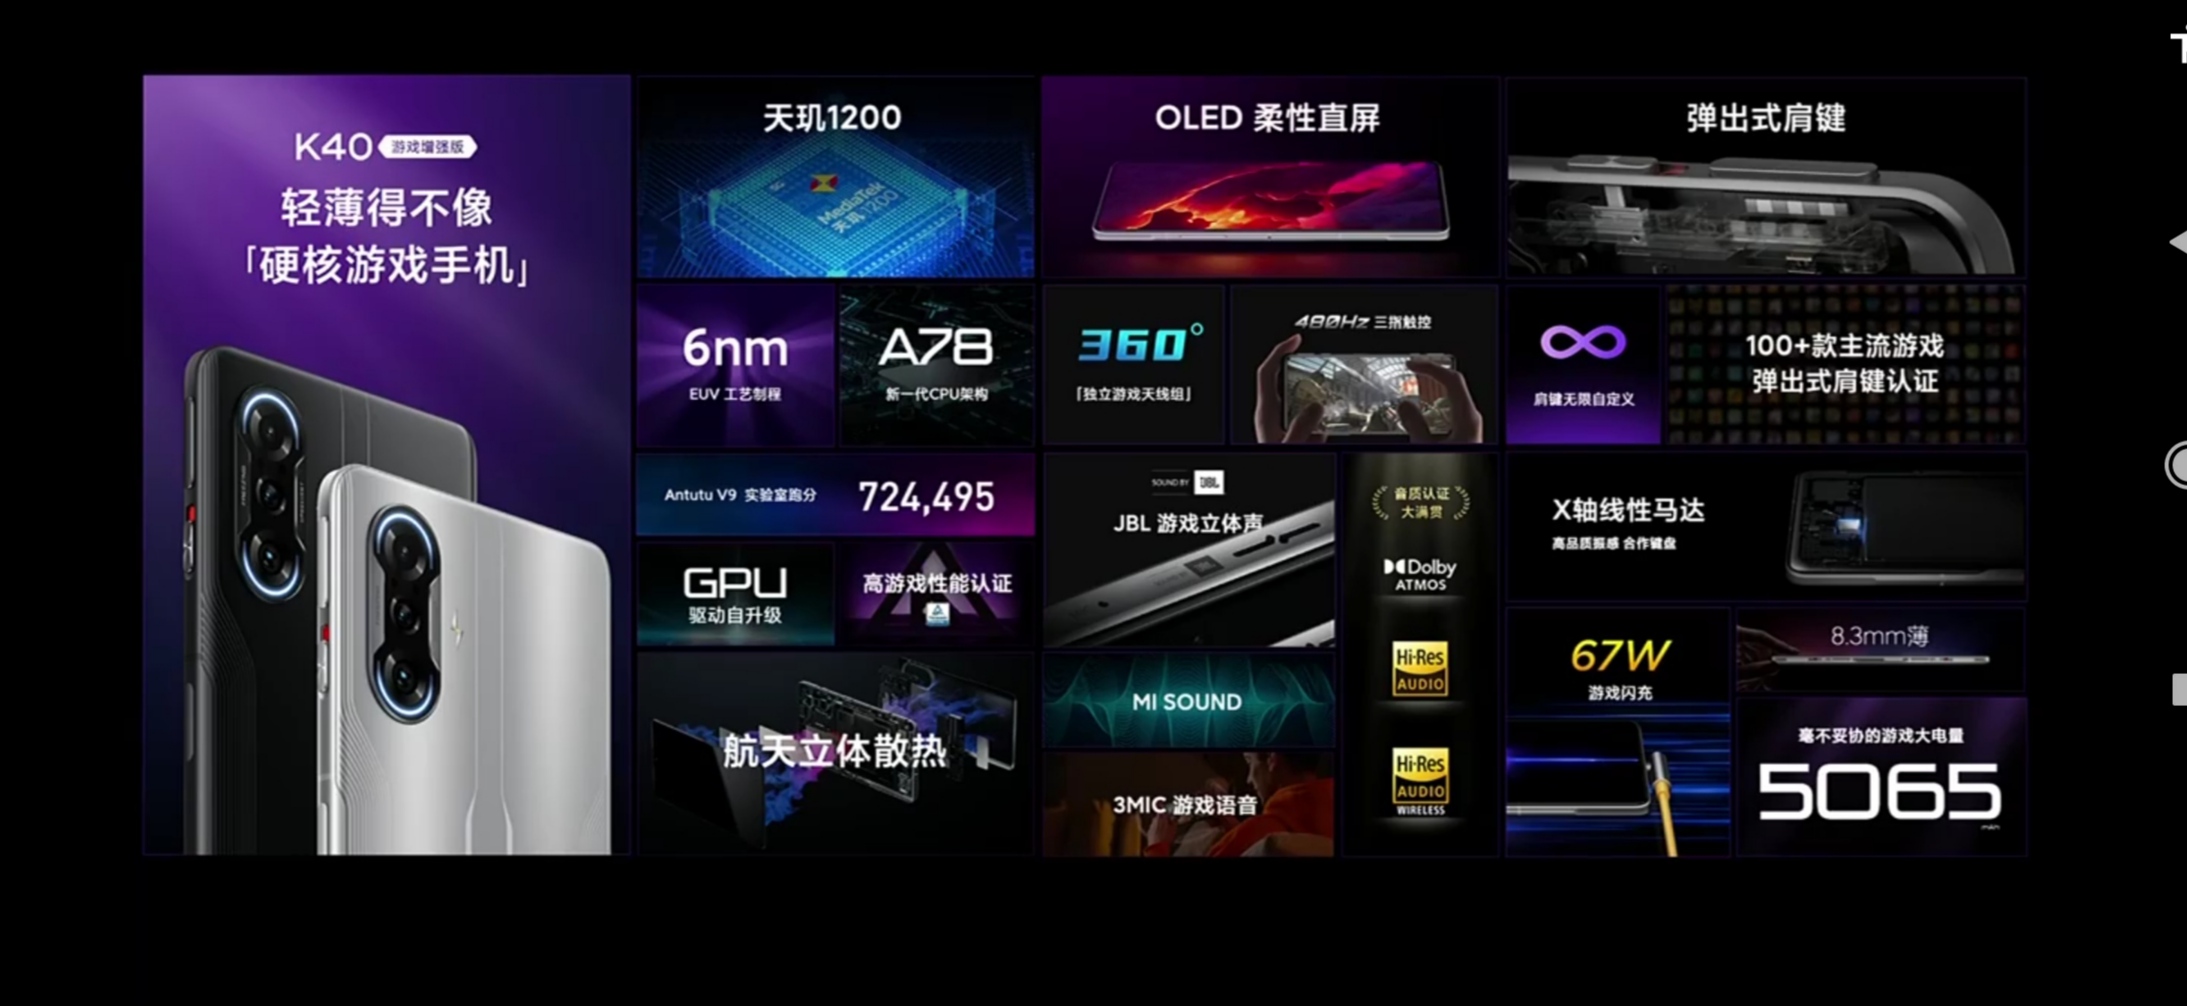 Xiaomi k40 game edition. Xiaomi Redmi k40 Gaming. Редми к40 гейминг эдишн. Xiaomi Redmi 40 game enhanced Edition. Redmi k40 характеристики.